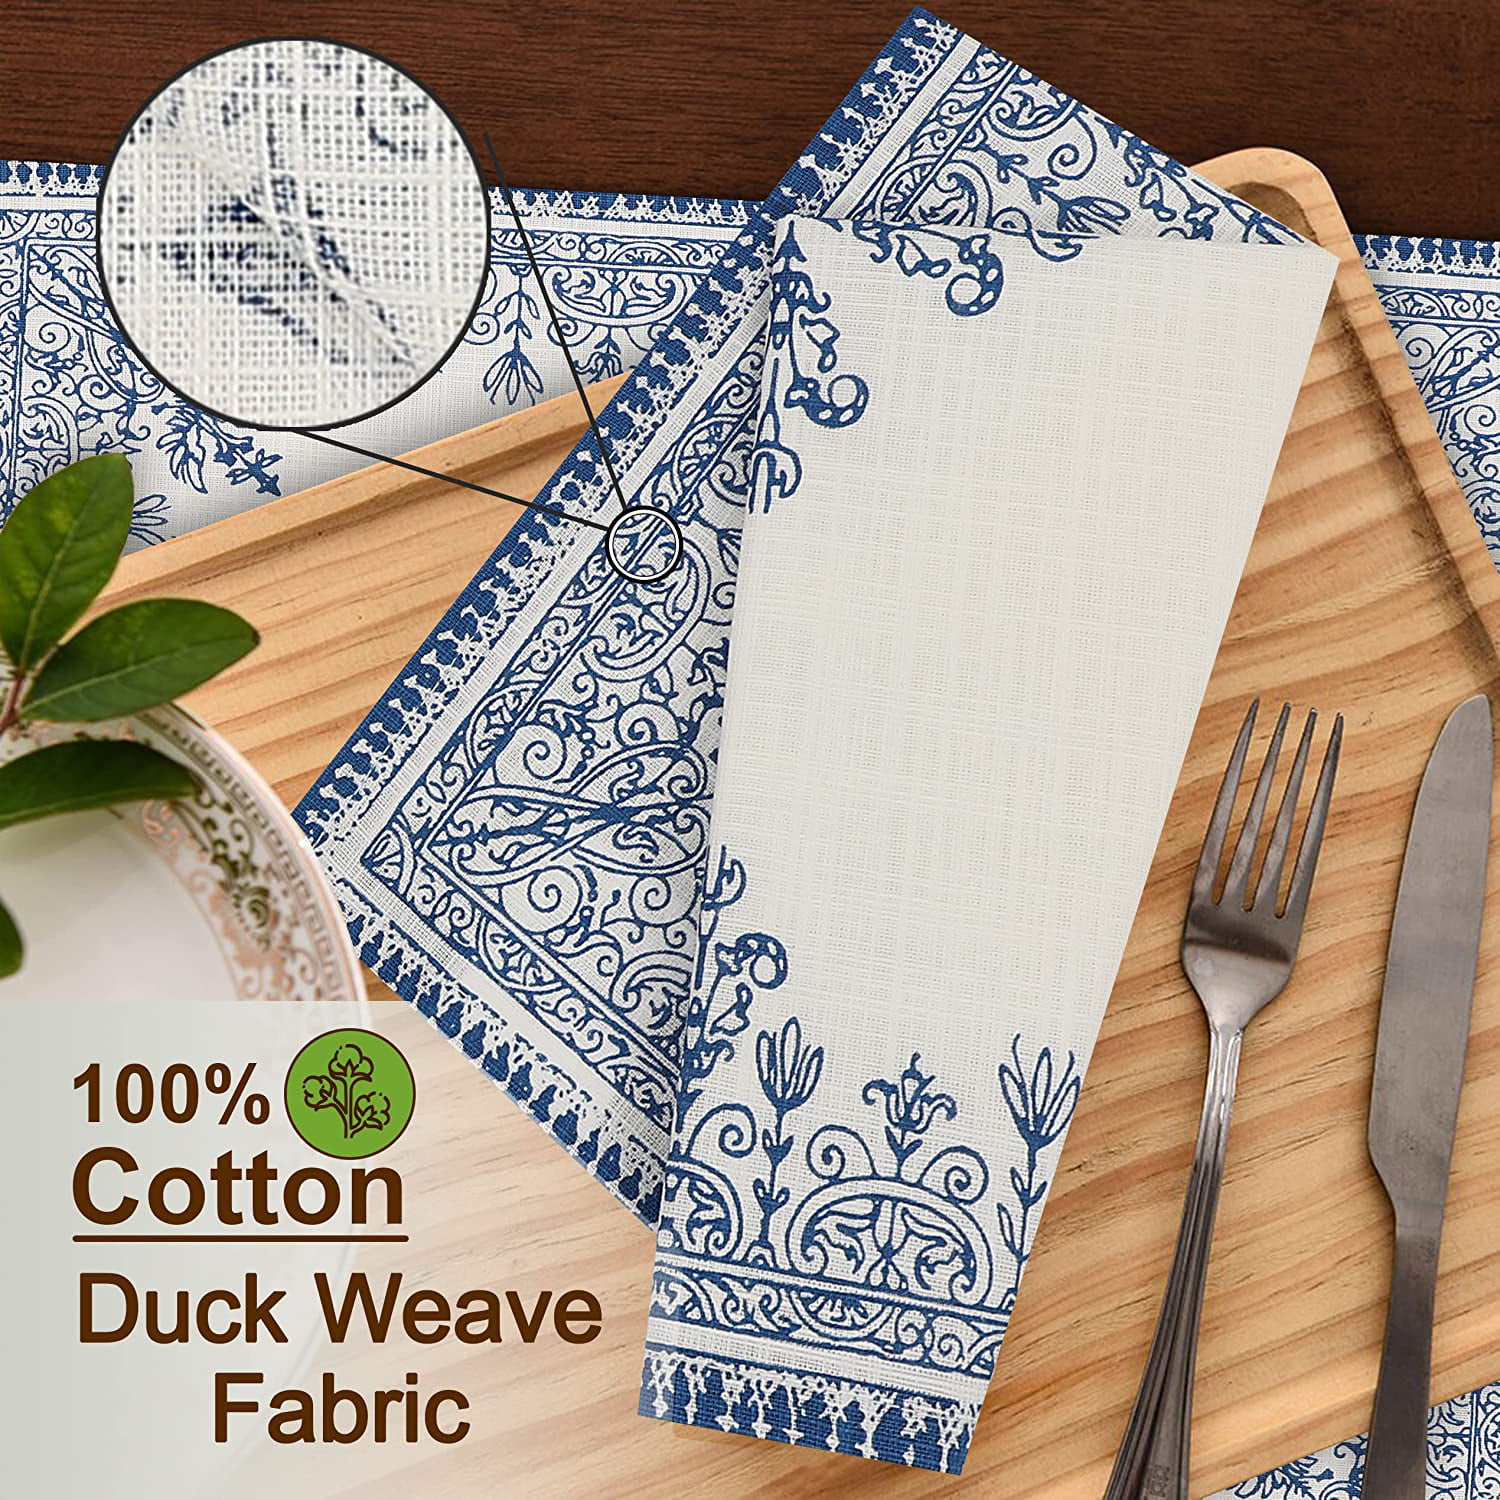 Ruvanti 100% Cotton Multi-Stripe Square Kitchen Cloth Napkins